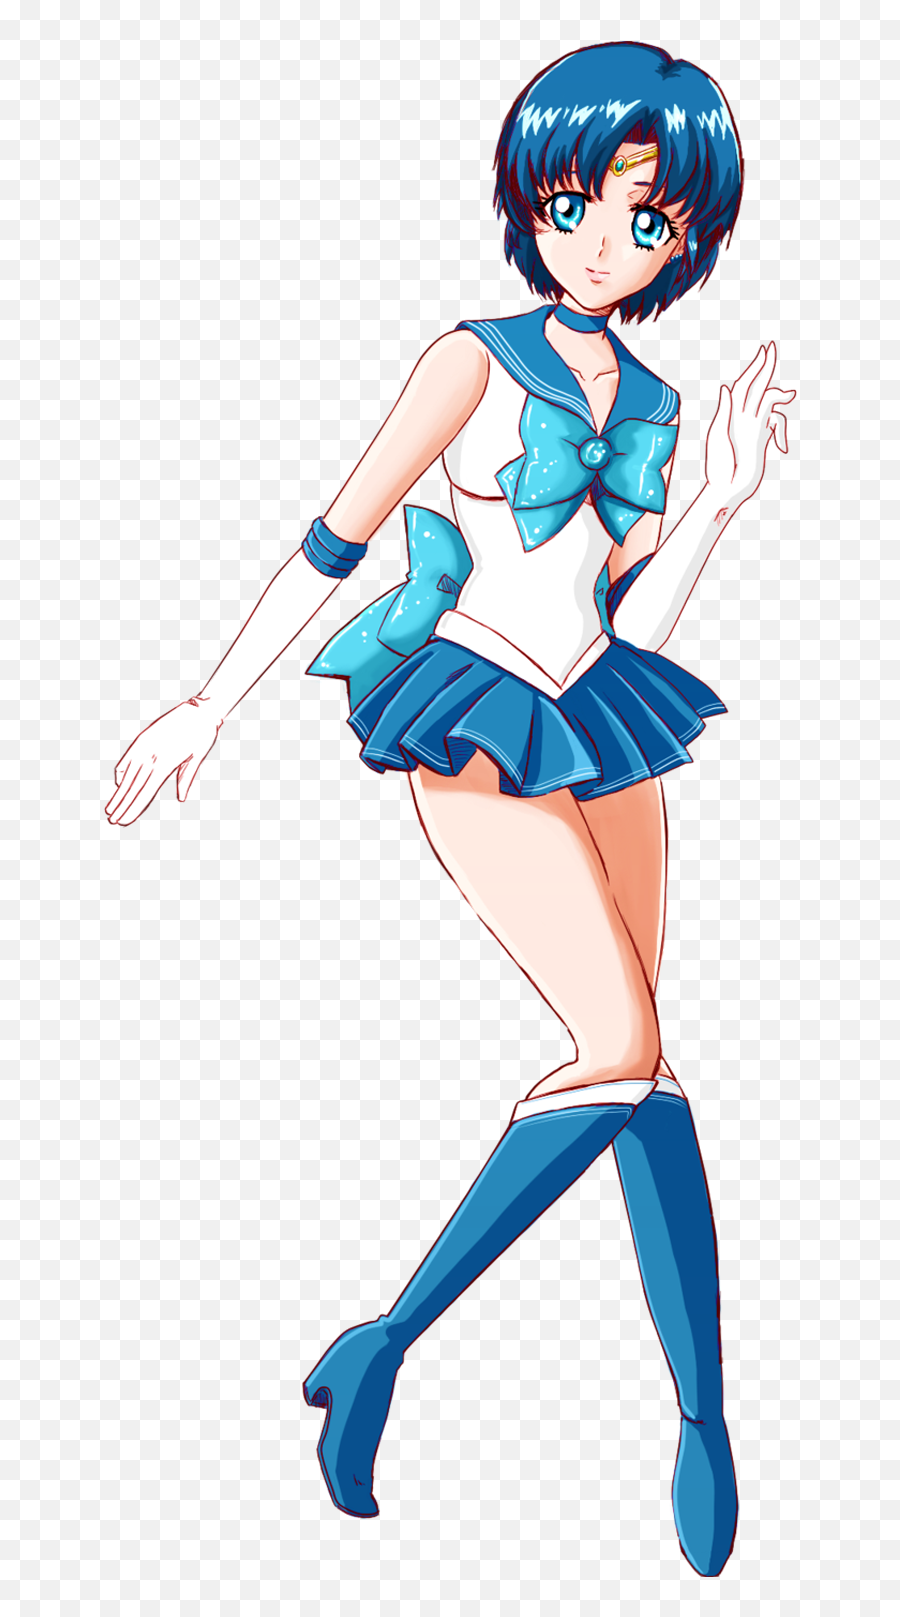 Hd Sailor Mercury Transparent Png Image - Sailor Mercury No Background,Sailor Mercury Png